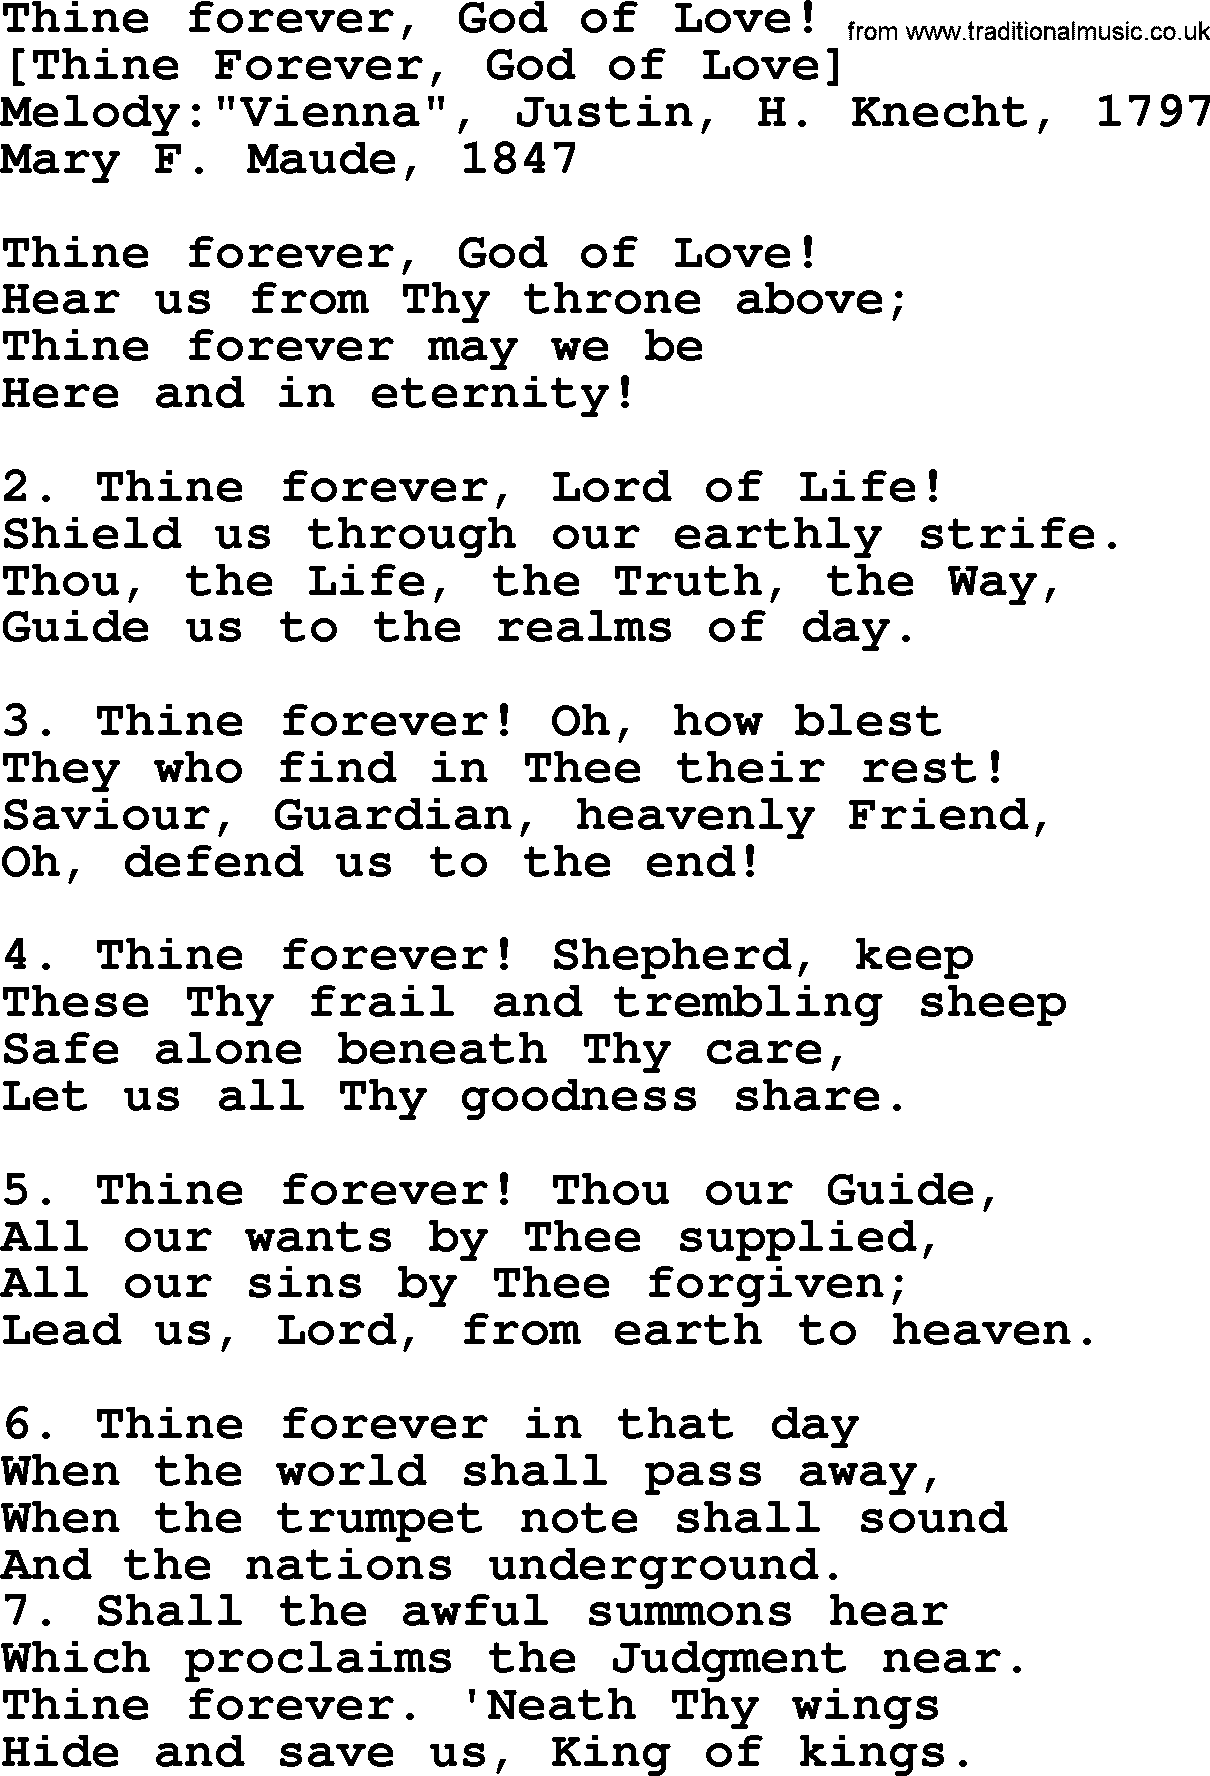 Old English Song: Thine Forever, God Of Love! lyrics